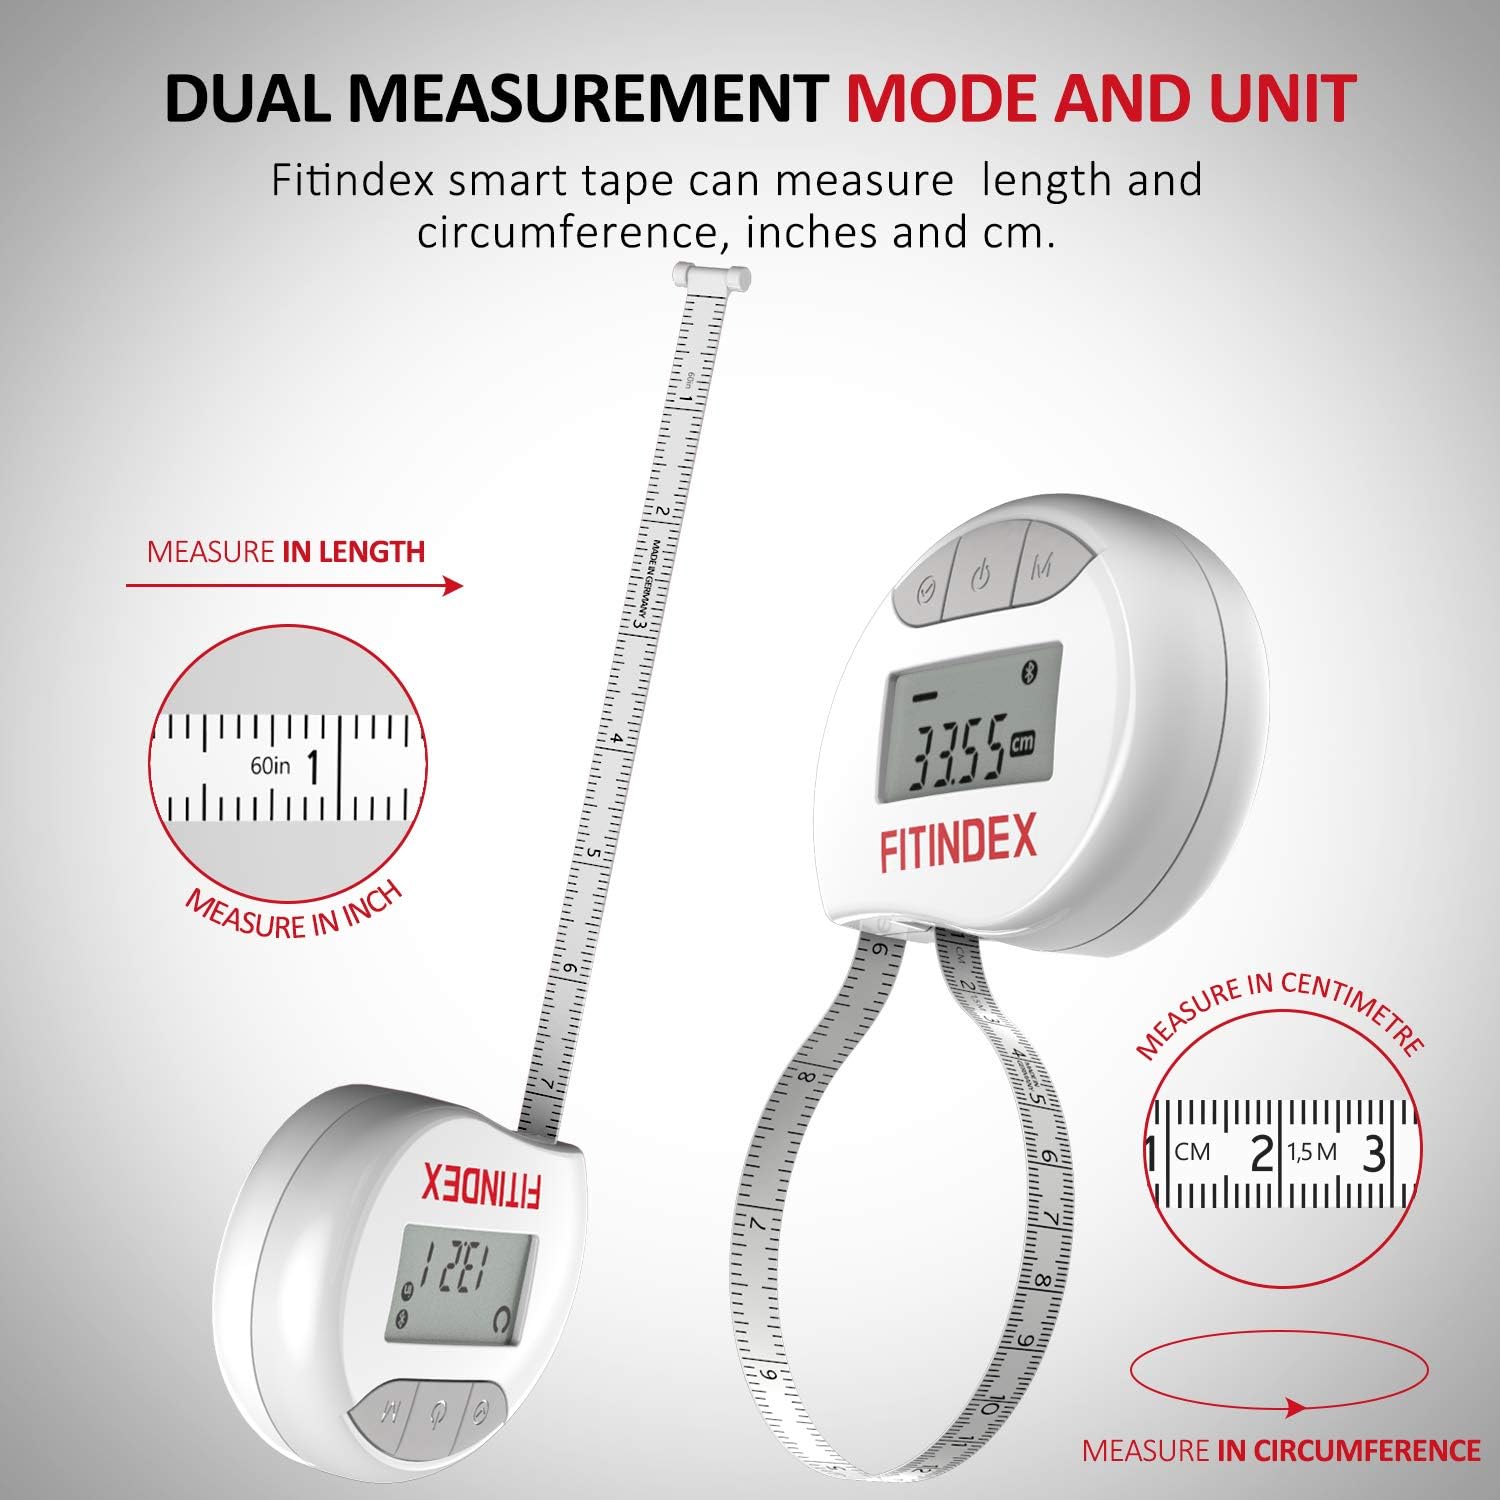 SlimPal Smart Tape Measure  Fitness Tracking 